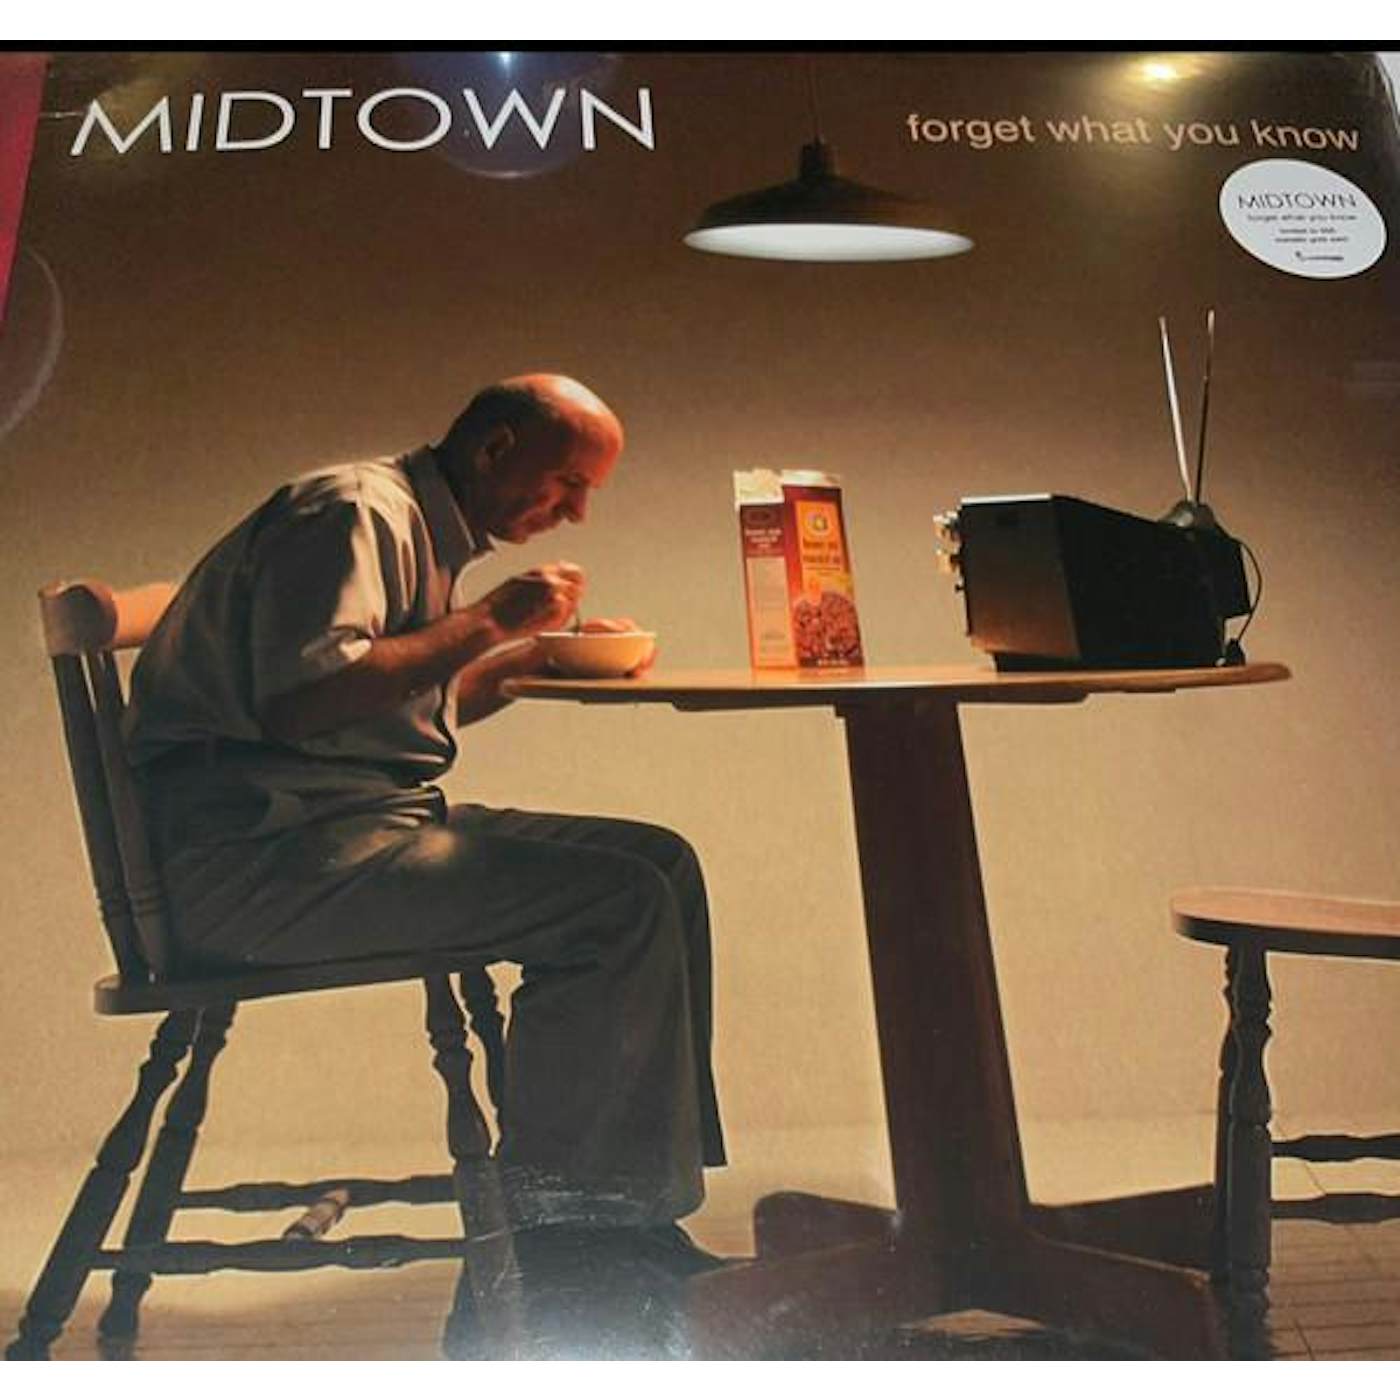 Midtown FORGET WHAT YOU KNOW (TRANSLUCENT RANGE W/ BLACK SWIRL VINYL) Vinyl Record